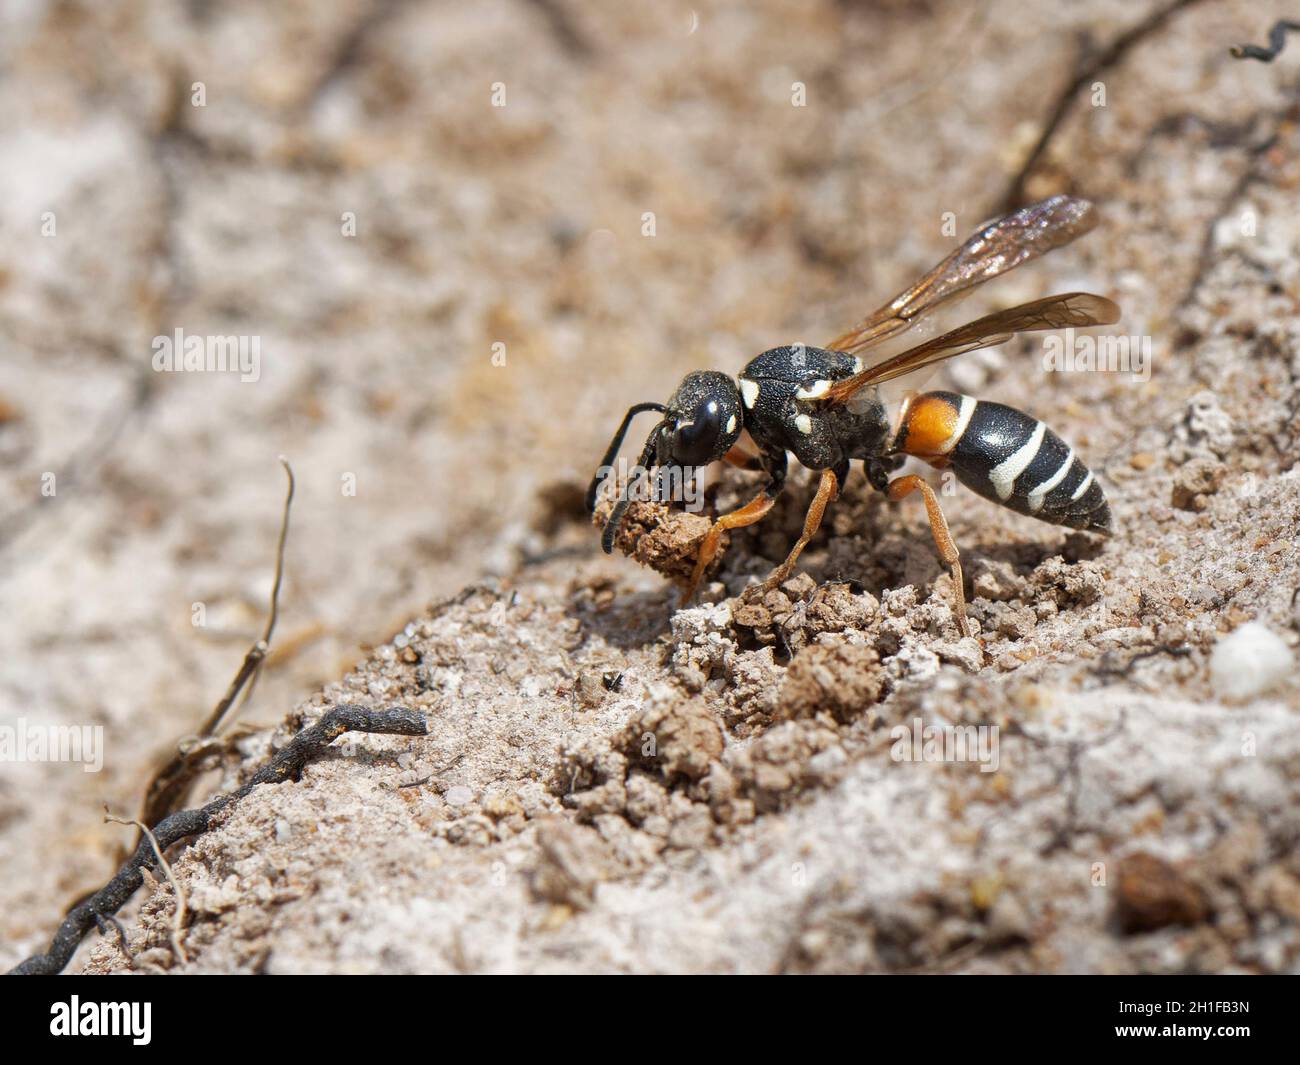 Purbeck mason wasp (Pseudepipona herrichii) female excavating a nest burrow and carrying away ball of damp soil, Dorset heathland, UK, July. Stock Photo